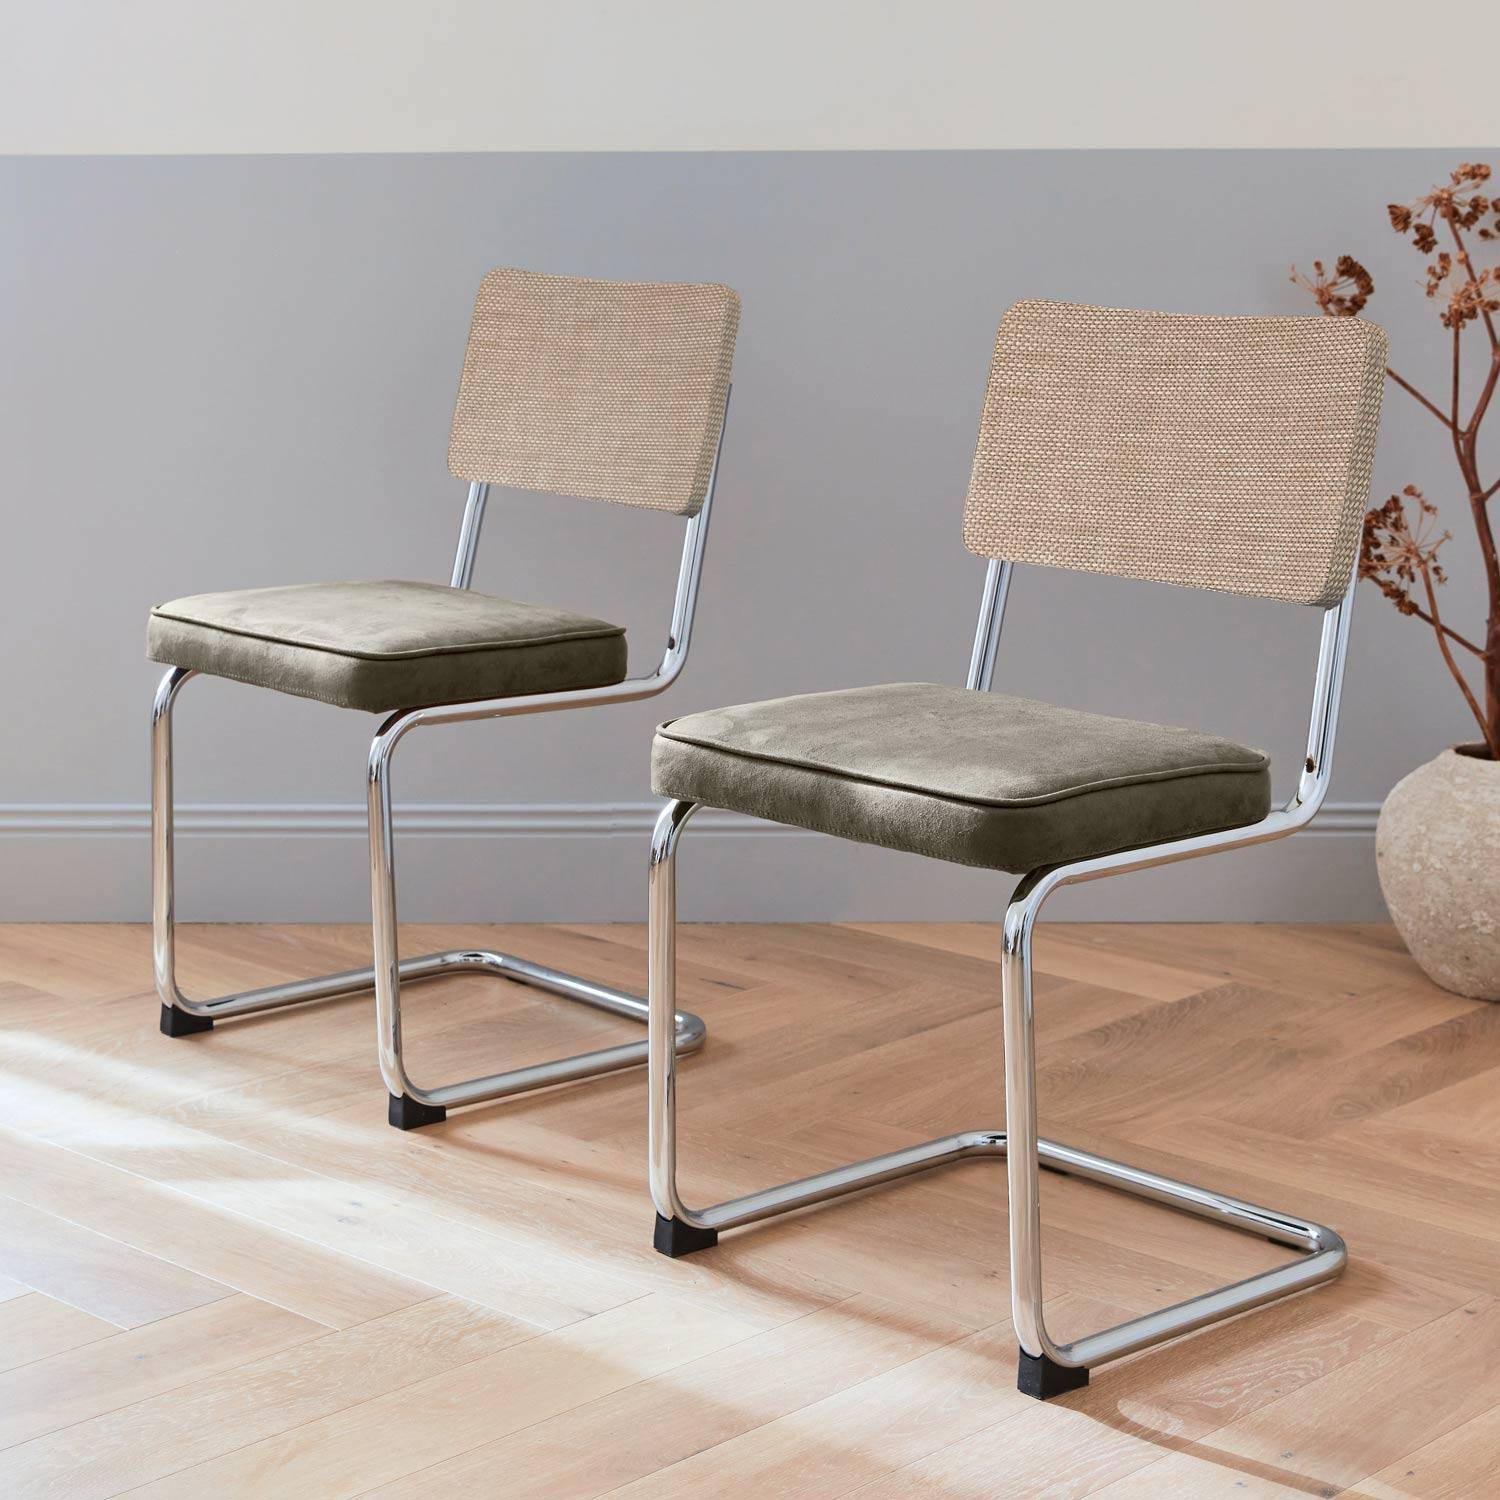 2 chaises cantilever - Maja - tissu kaki et résine effet rotin, 46 x 54,5 x 84,5cm   Photo1